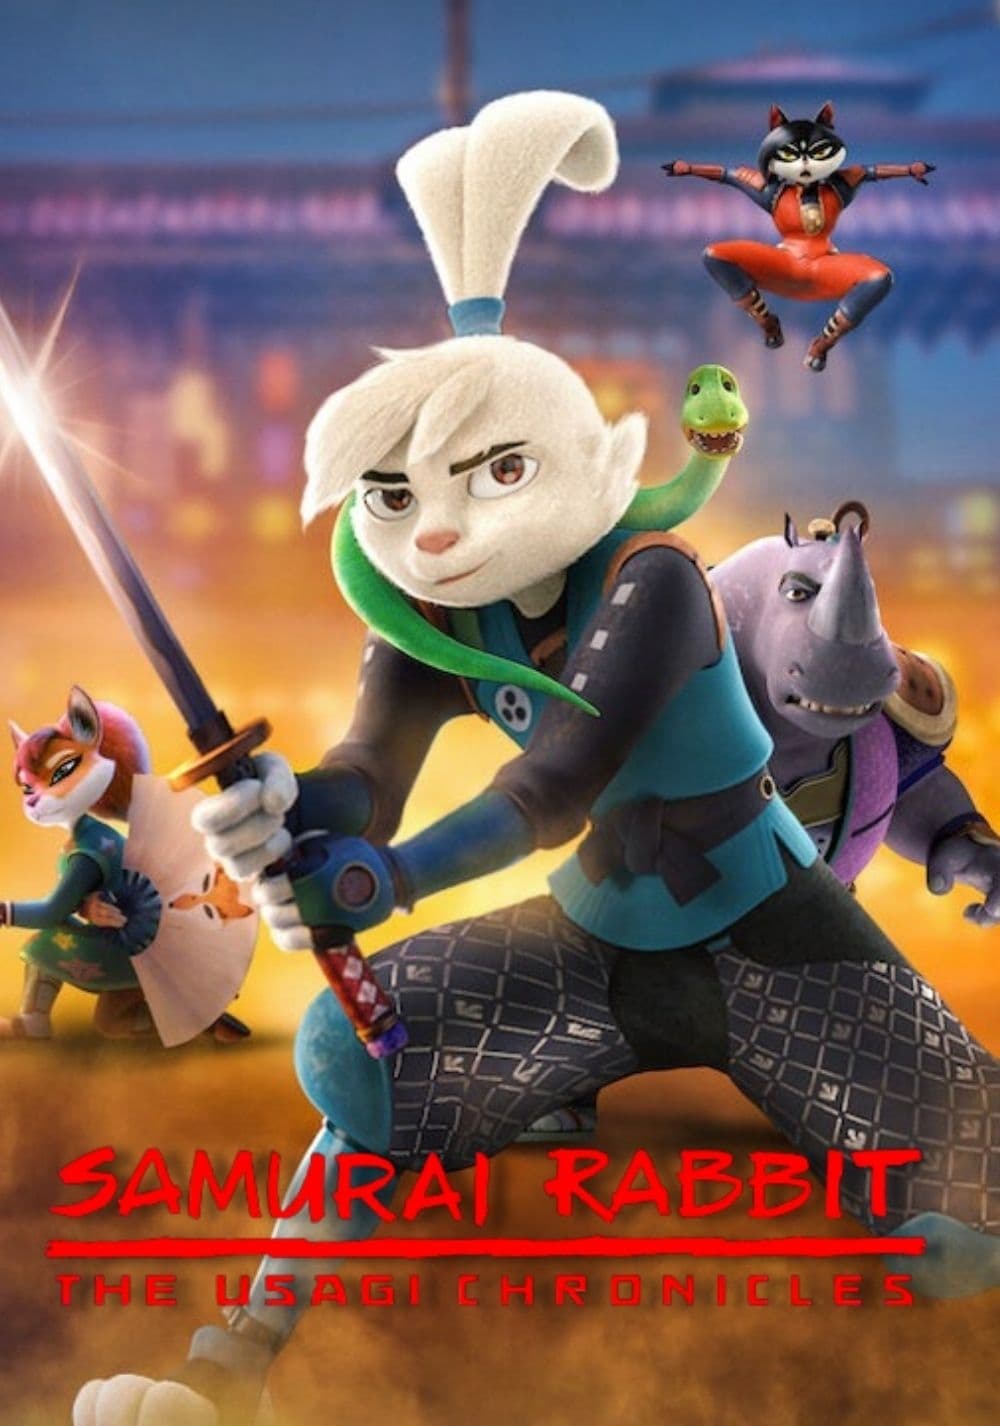 Samurai Rabbit: The Usagi Chronicles TV Shows About Based On Comic